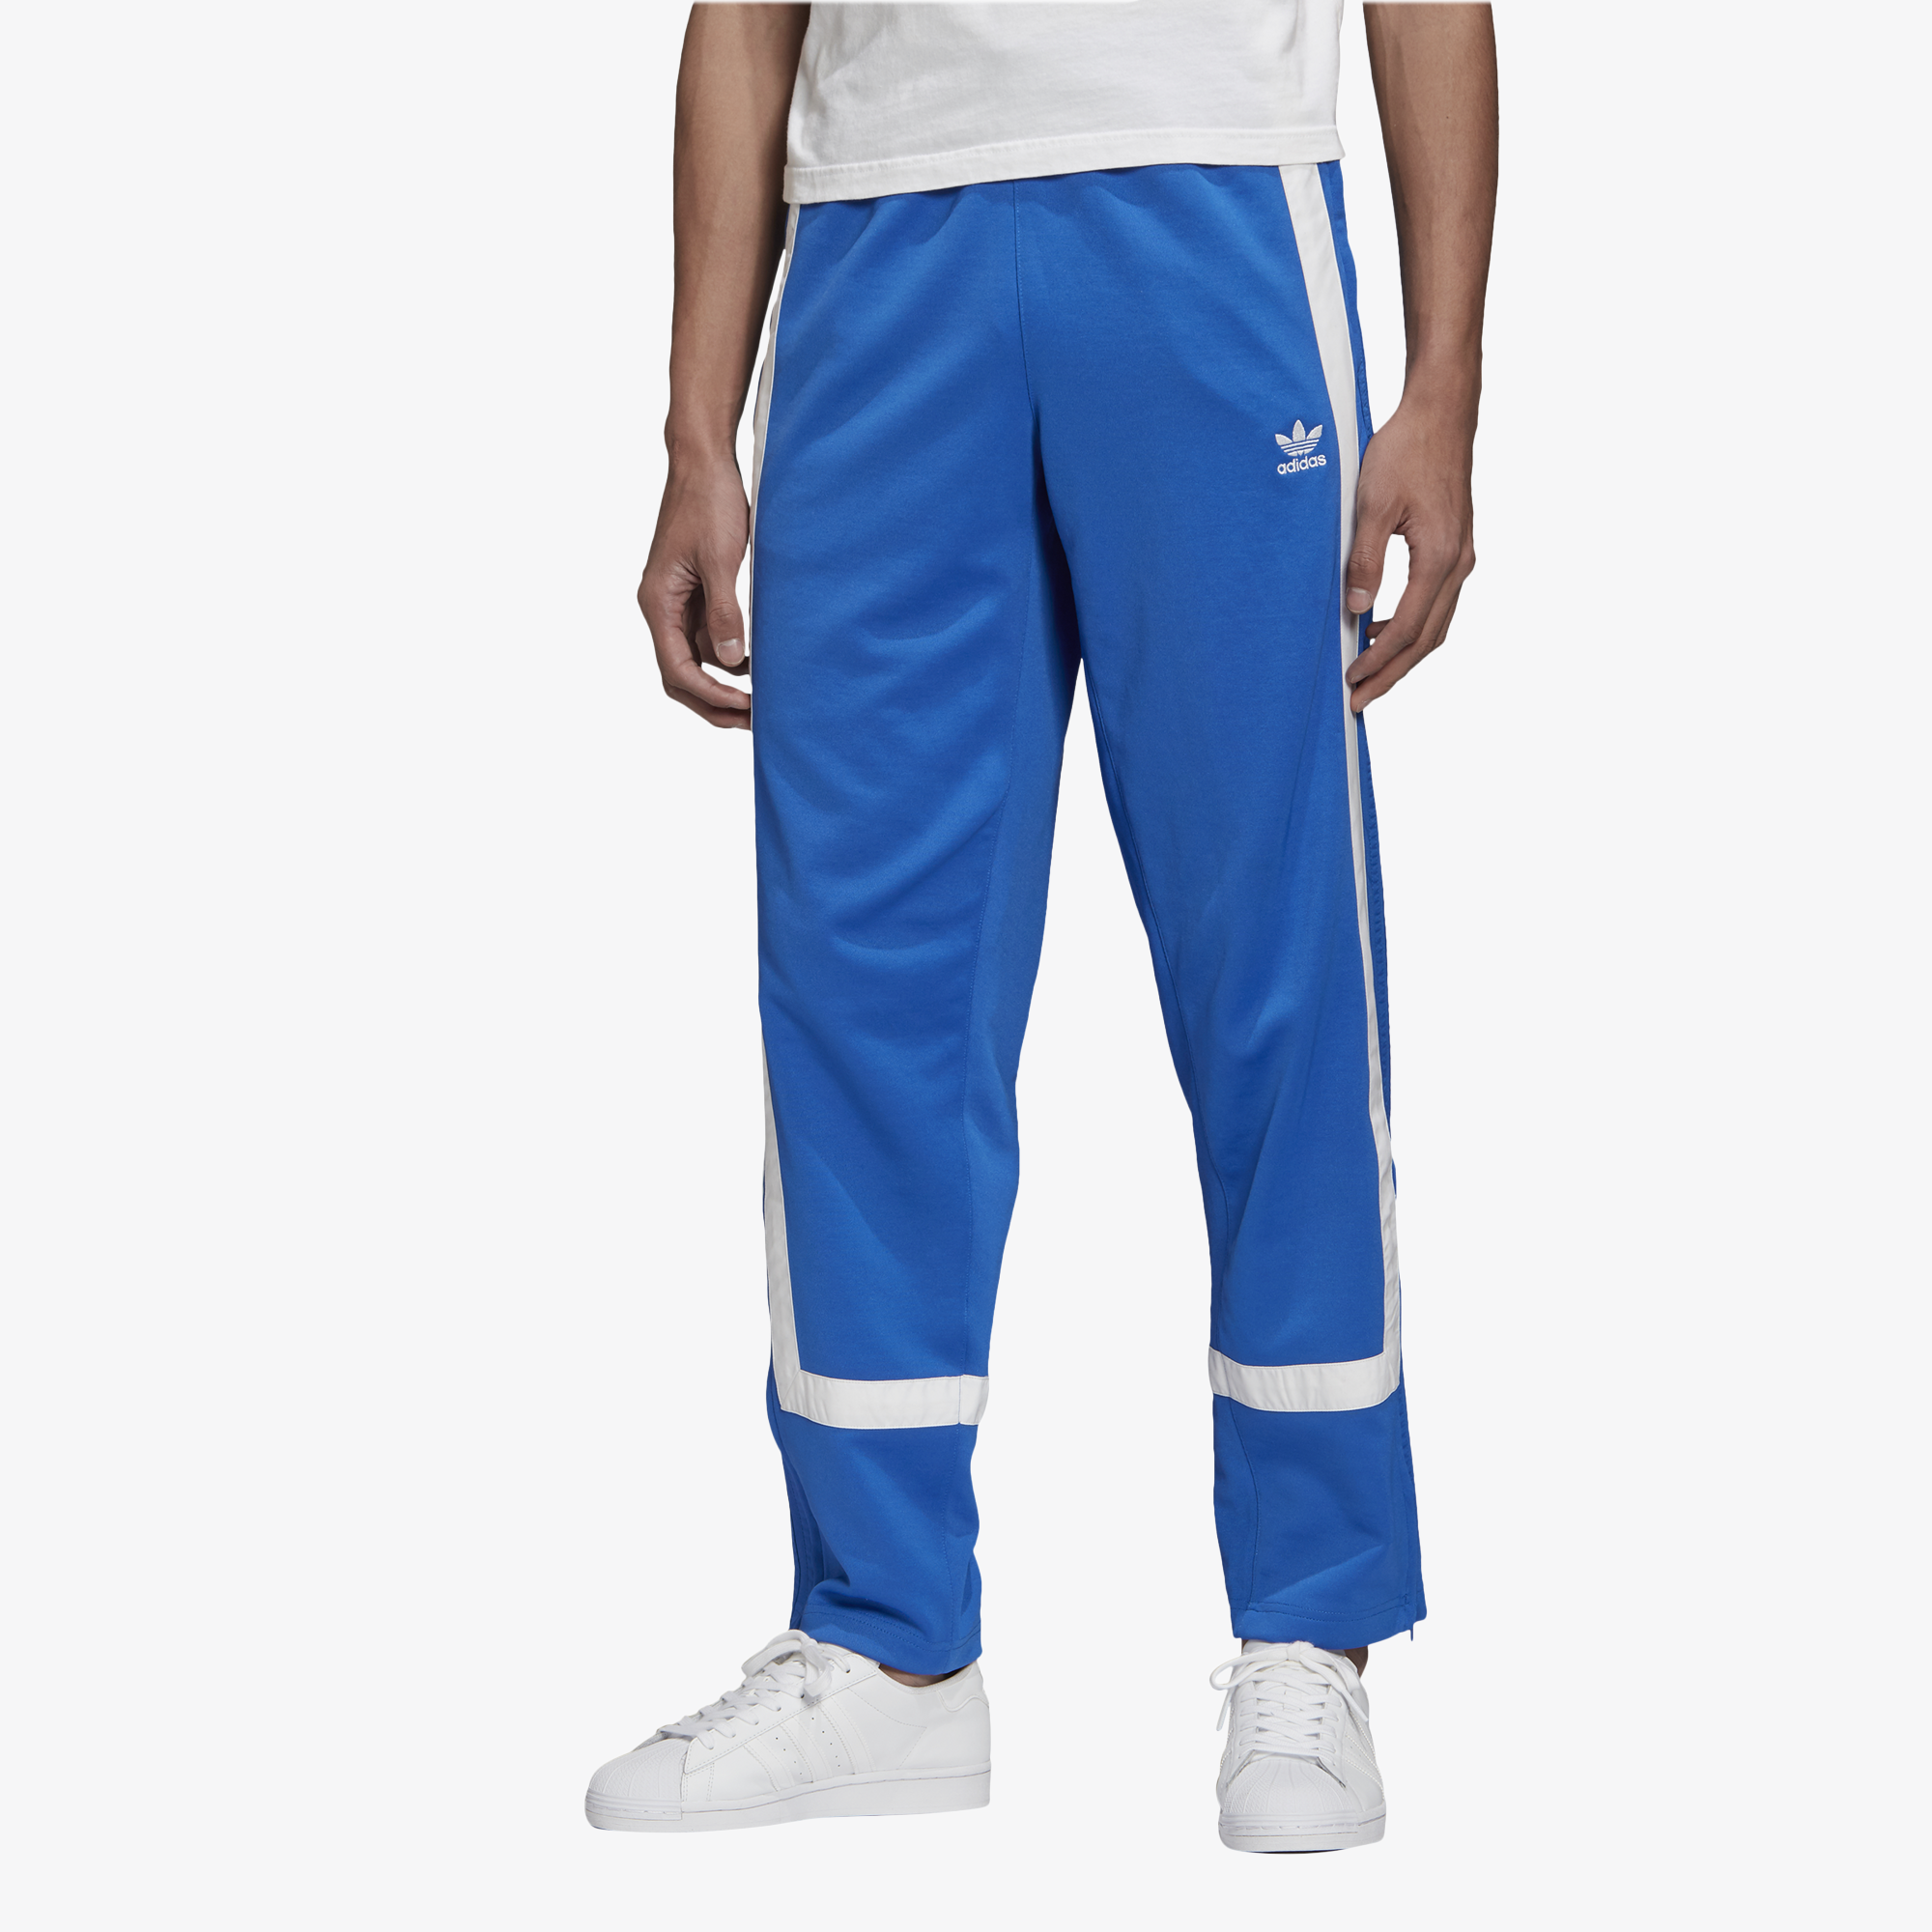 adidas pants mens blue